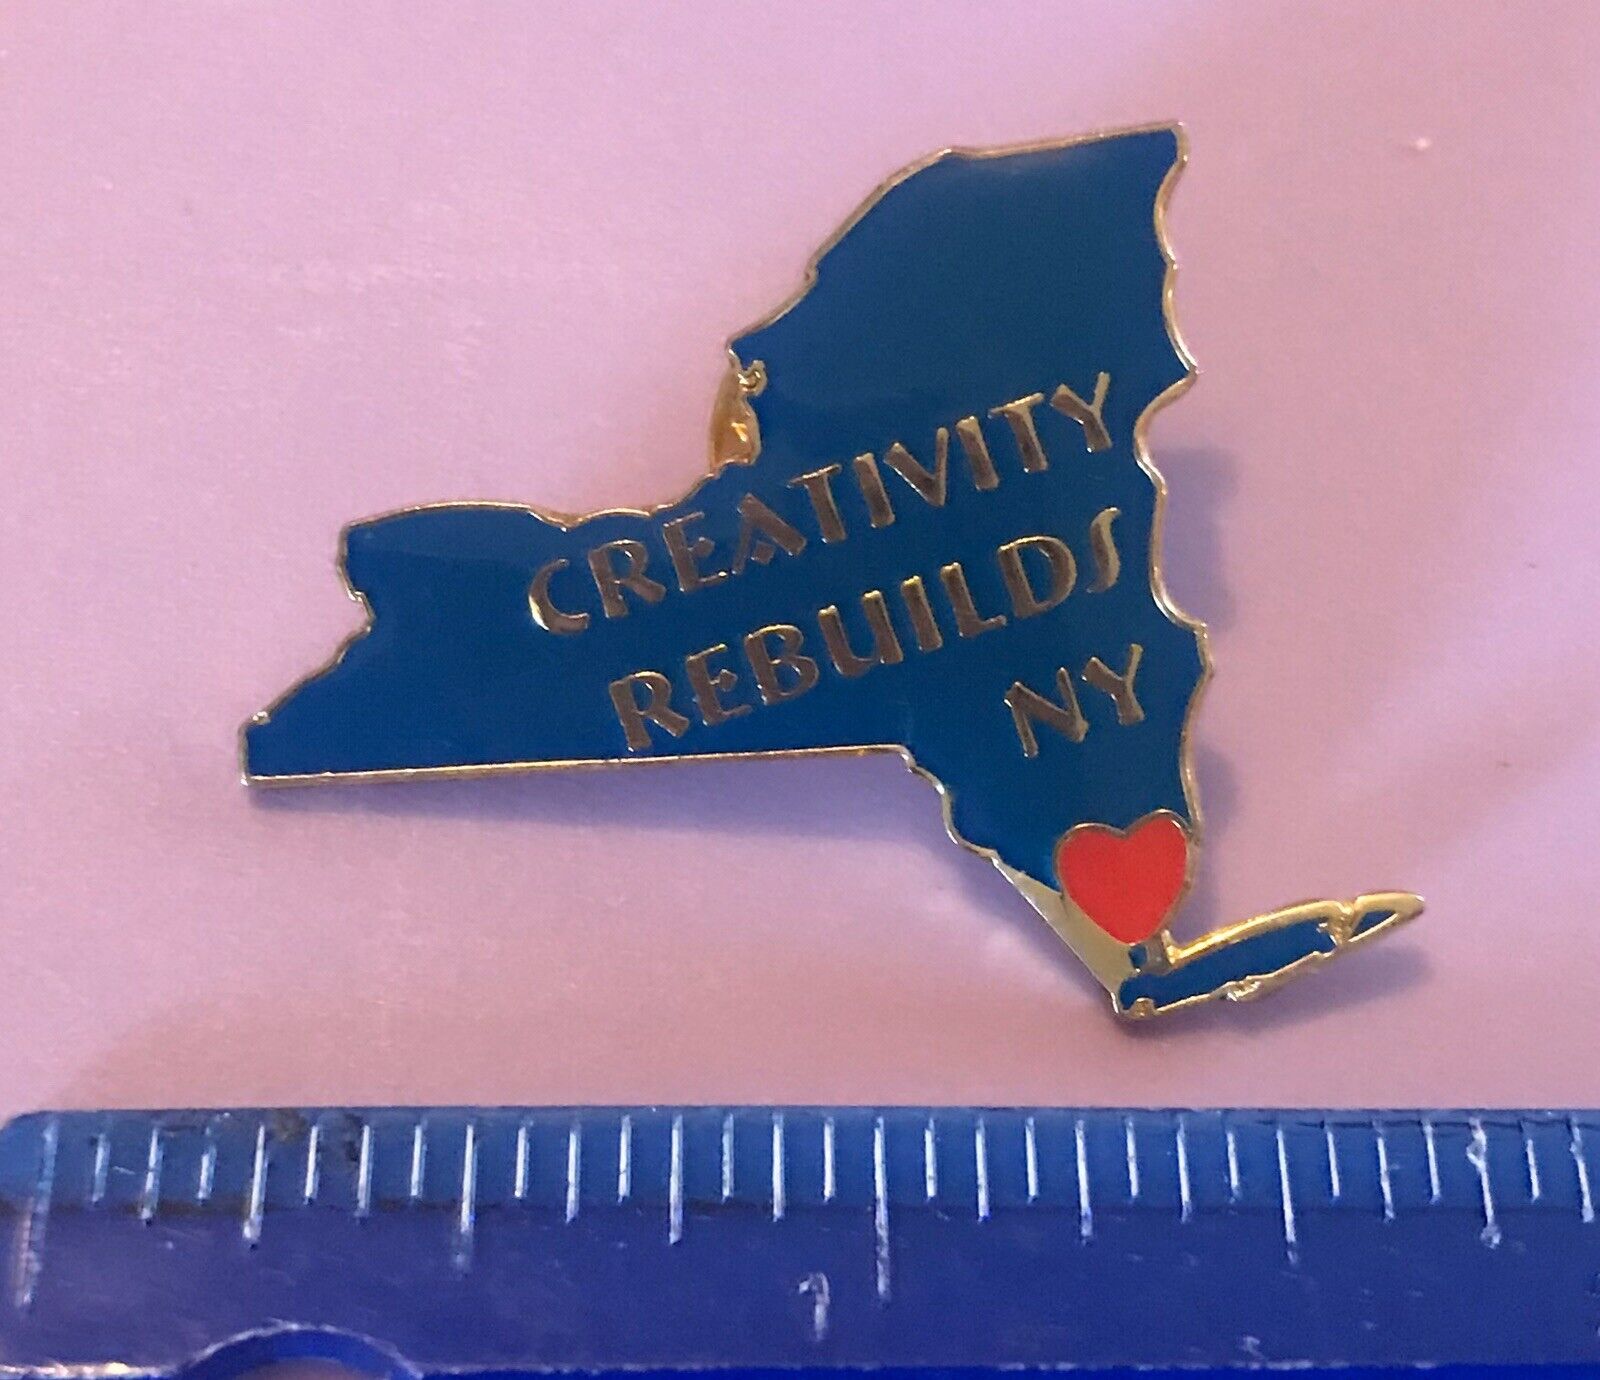 Creativity Rebuilds New York Lapel Pin